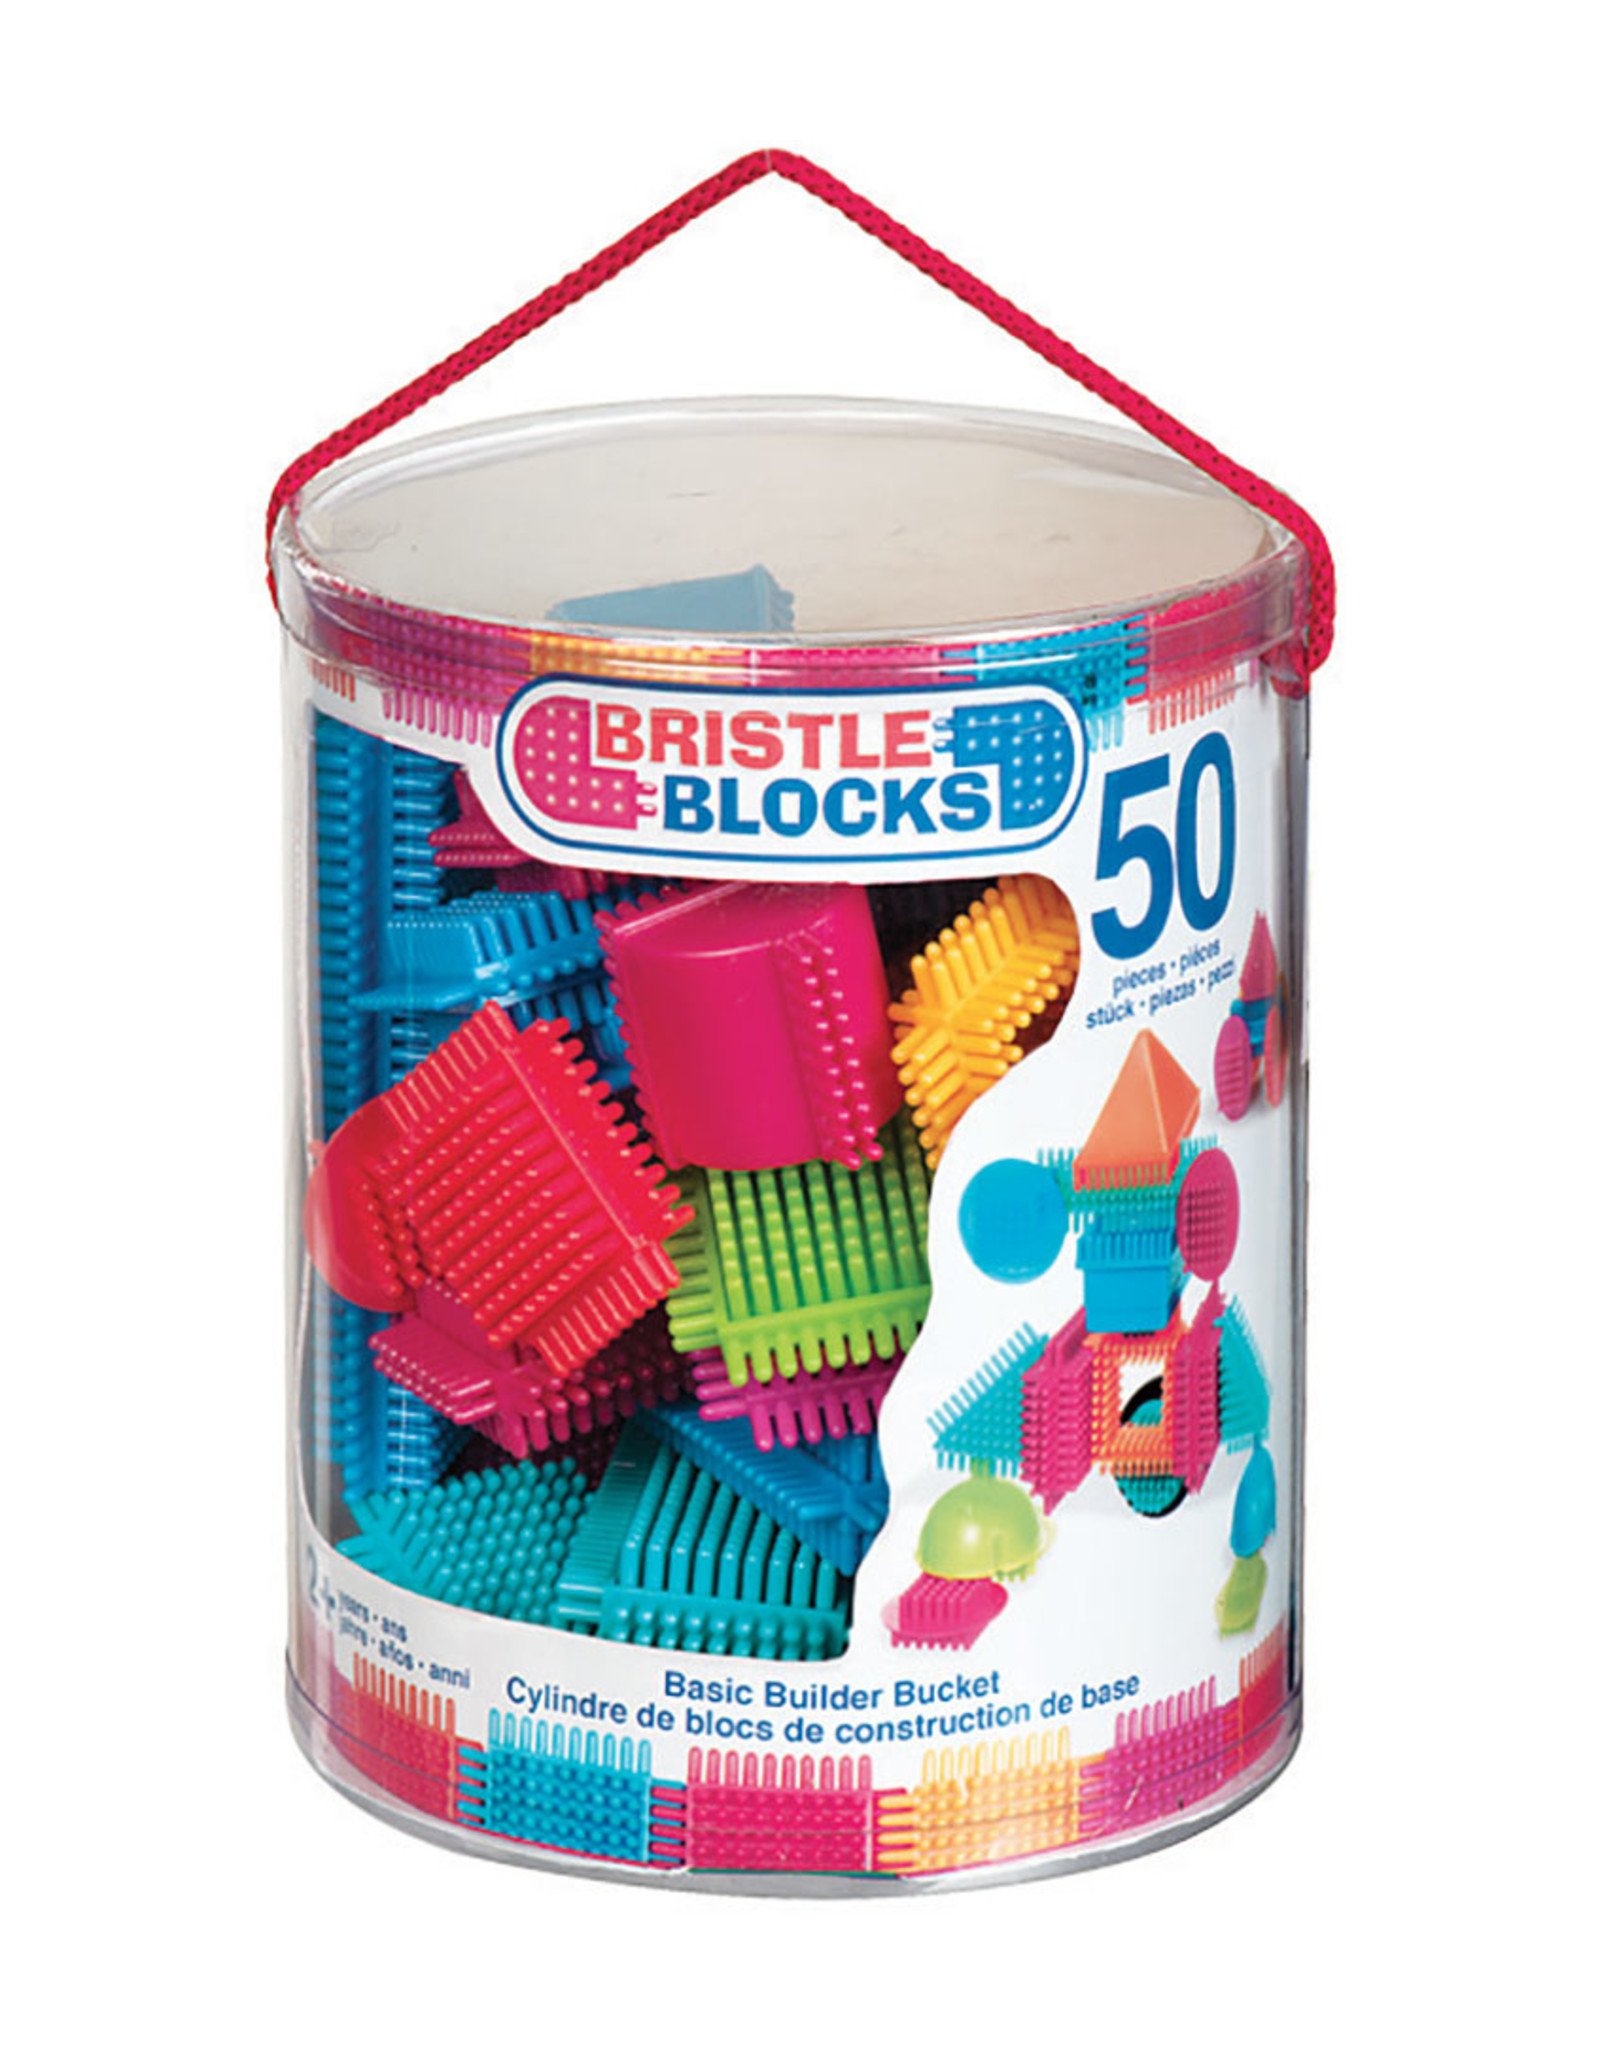 bristle blocks boxes